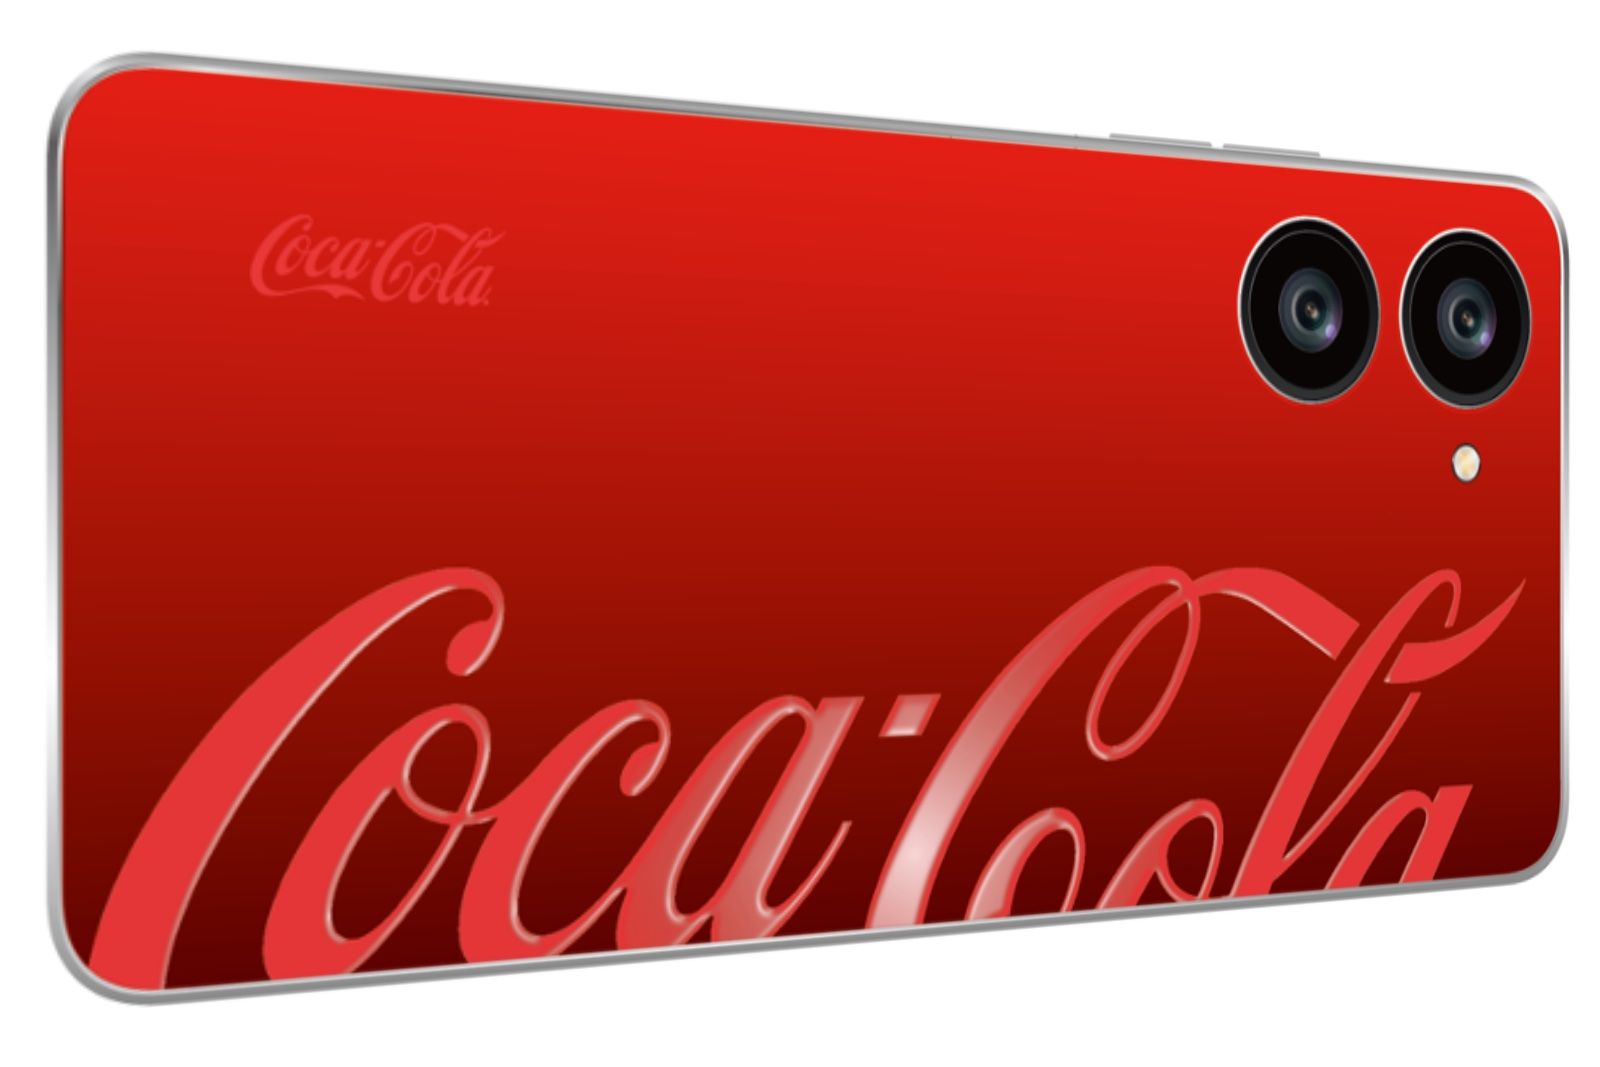 coca cola phone render